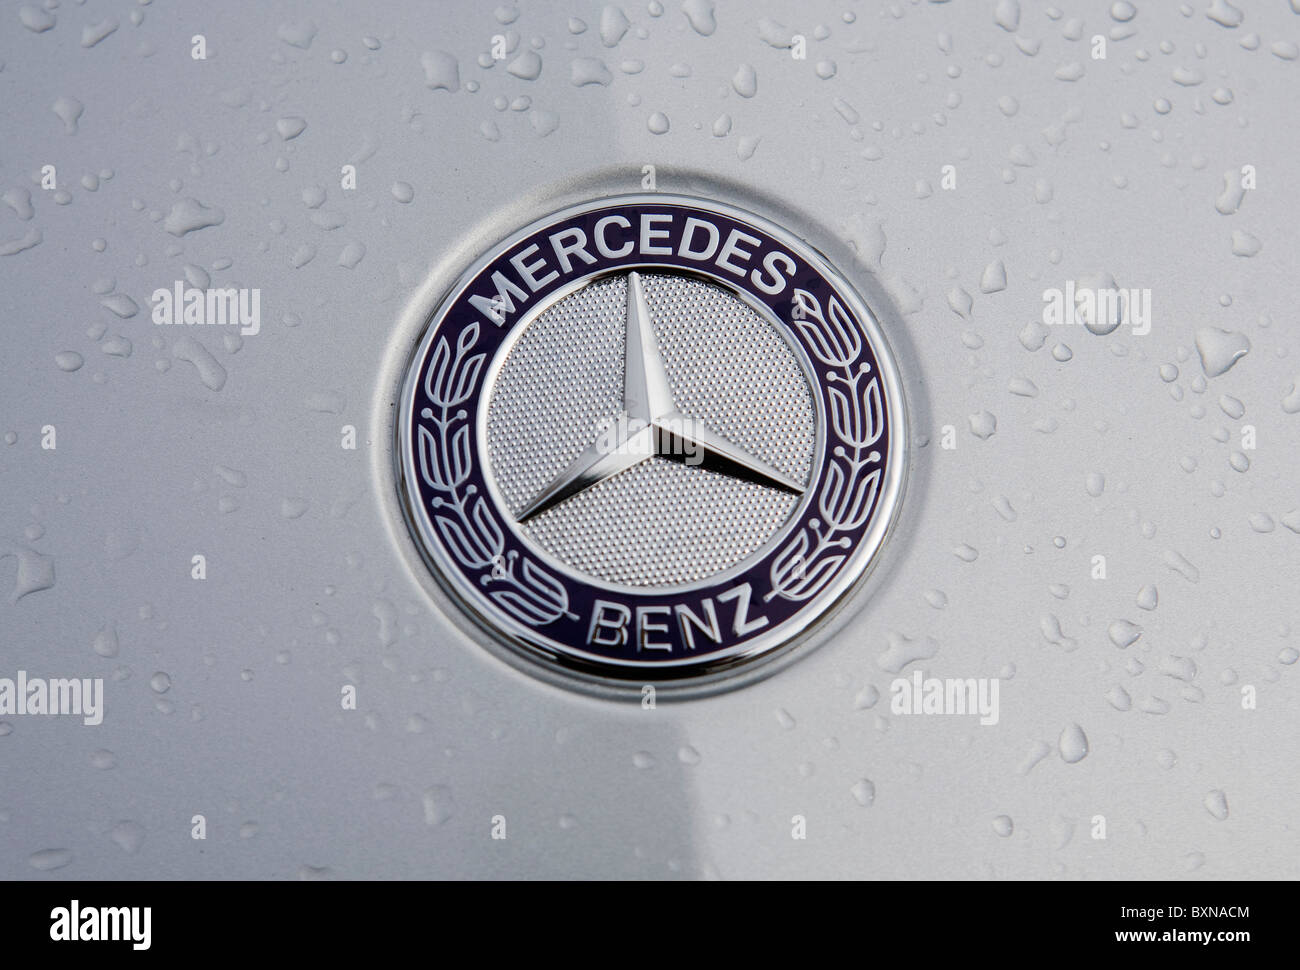 A Mercedes- Benz car dealership.  Stock Photo